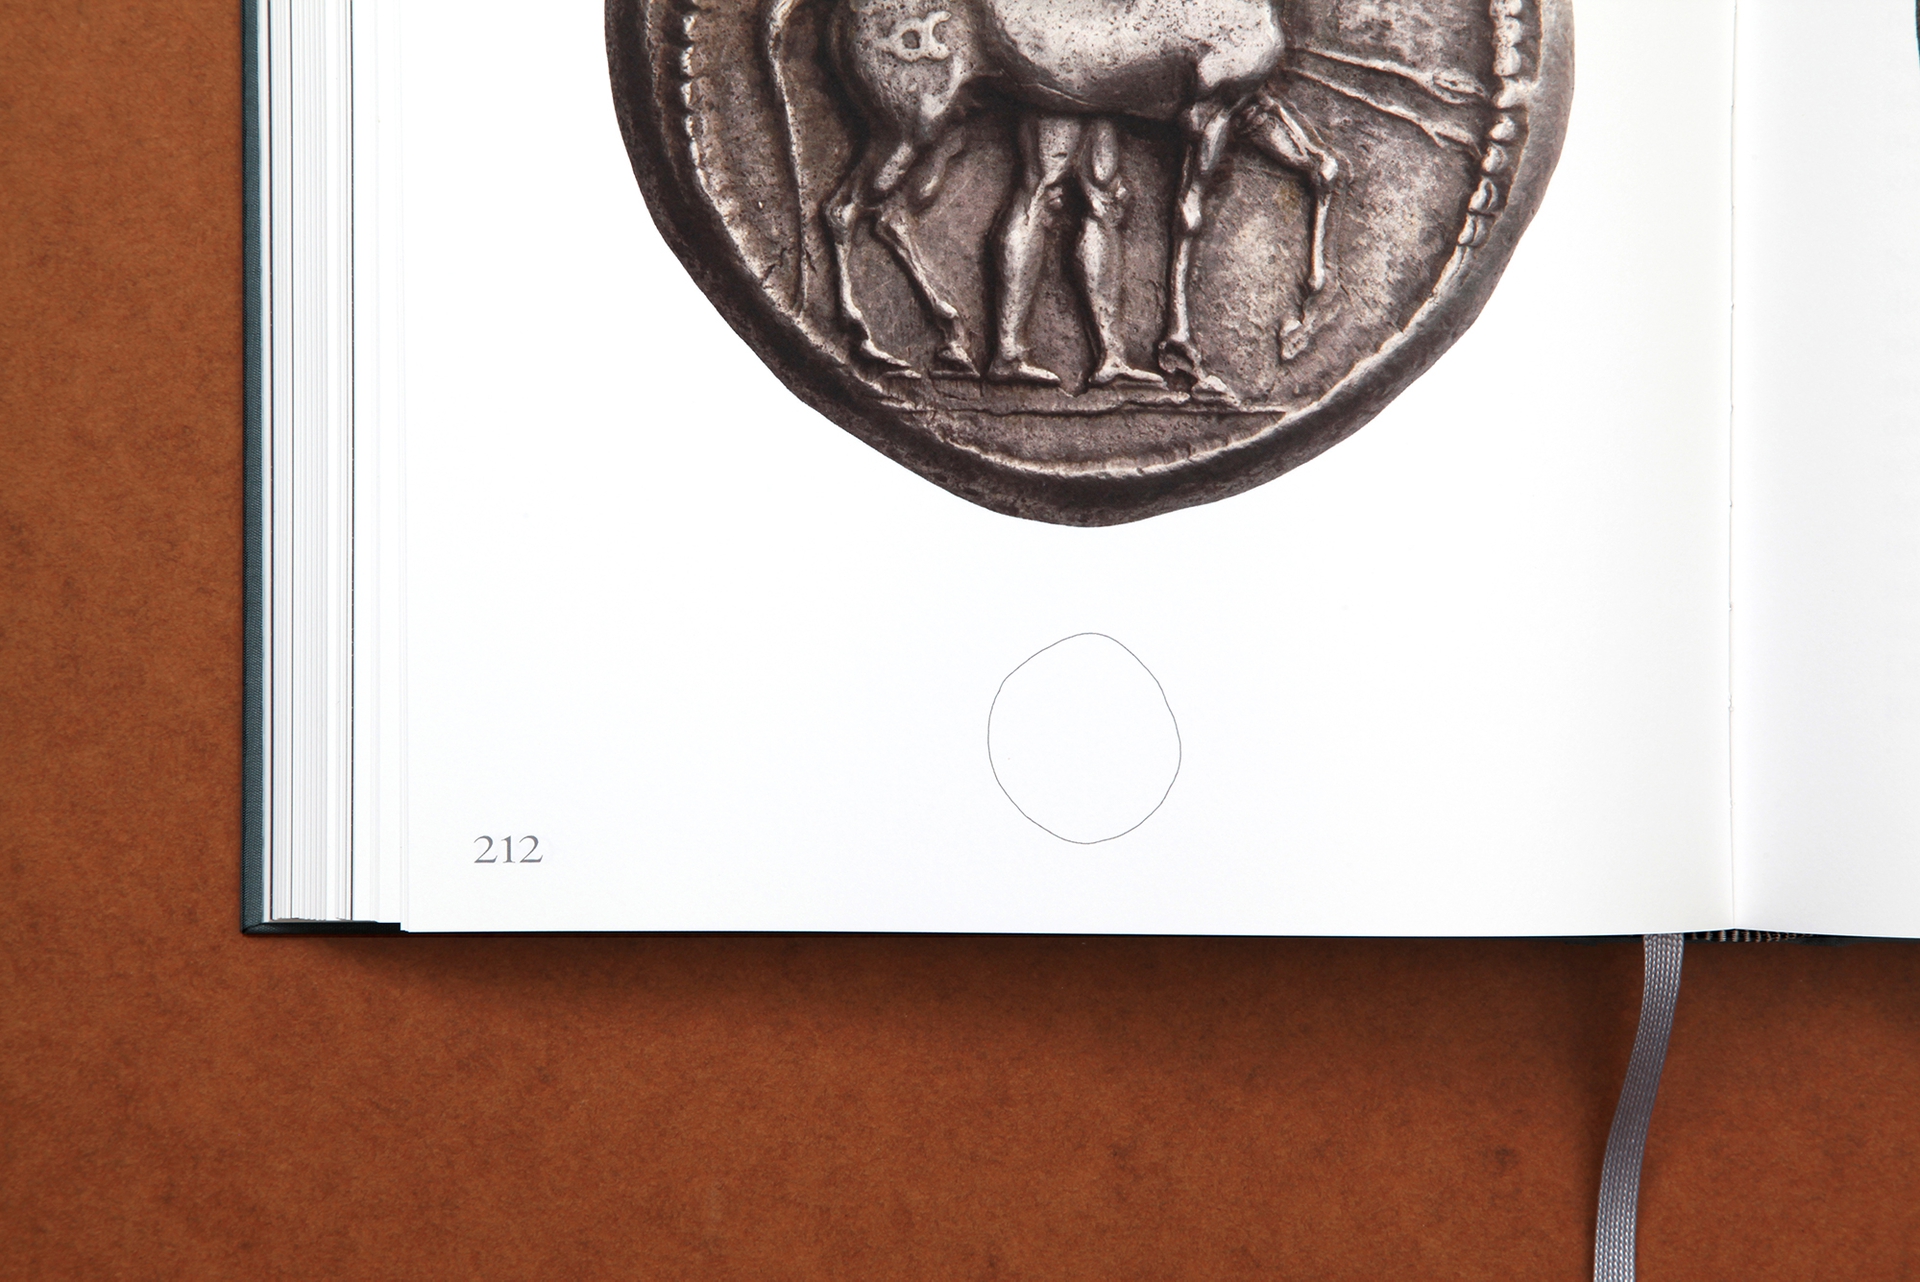 11-bob-design-saager-coin-book-overhead-zoom1-23997.jpg